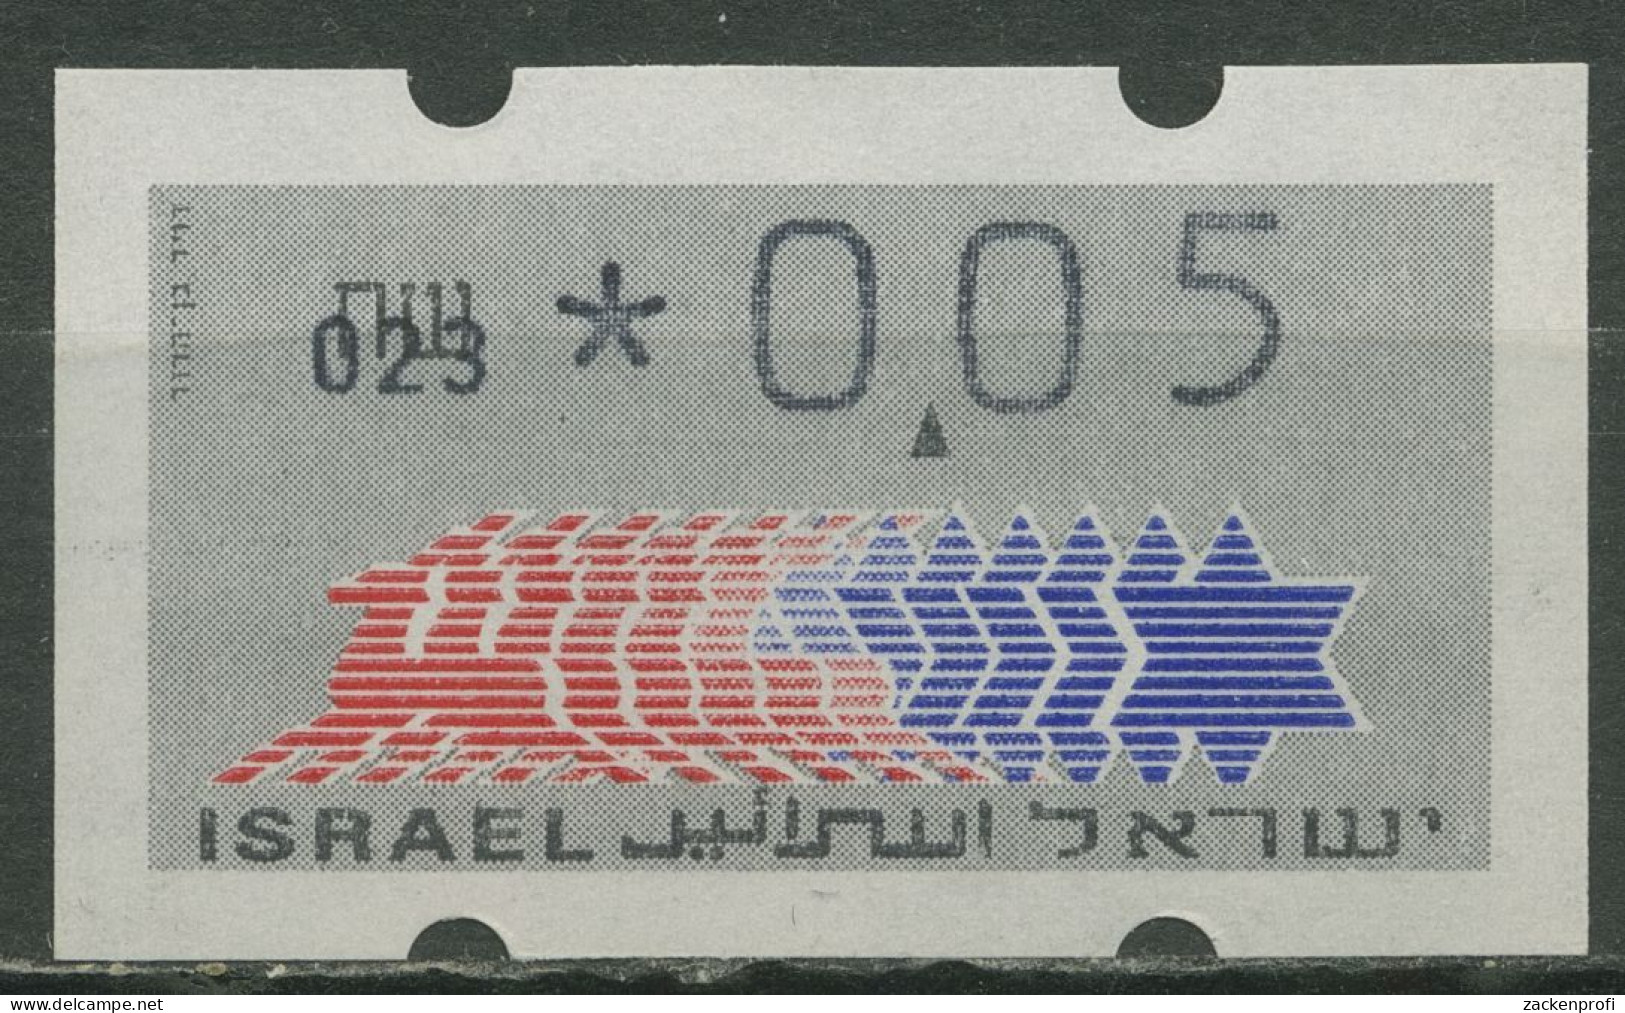 Israel ATM 1990 Hirsch Automat 023 Einzelwert ATM 3.1.23 Postfrisch - Frankeervignetten (Frama)